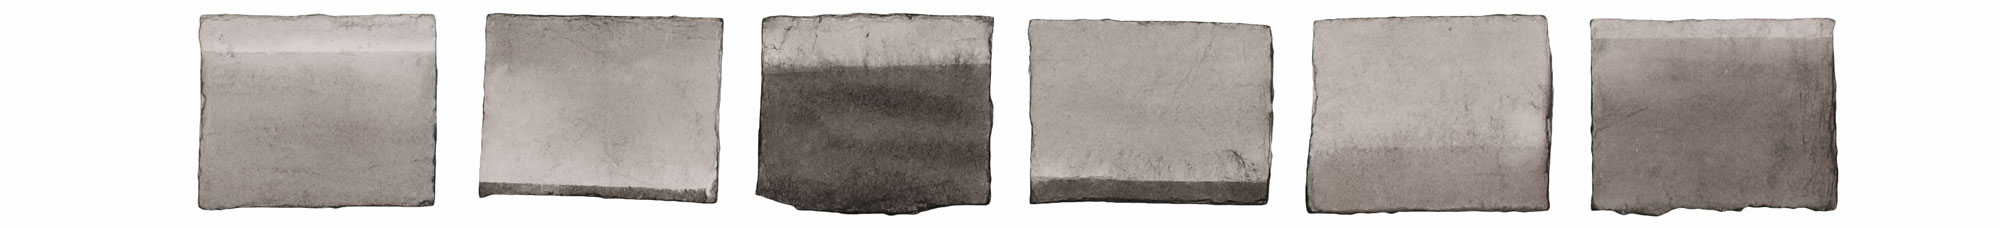   Sem Título, 2017. Nanquim   sobre   papel. Cada 6 x 5 cm | 41 x 5 cm (Conj.&nbsp;de 6 imgs.)    Untitled, 2017. Ink on paper. Each 6 x 5 cm | 41 x 5 cm (Set of 6 imgs.)  